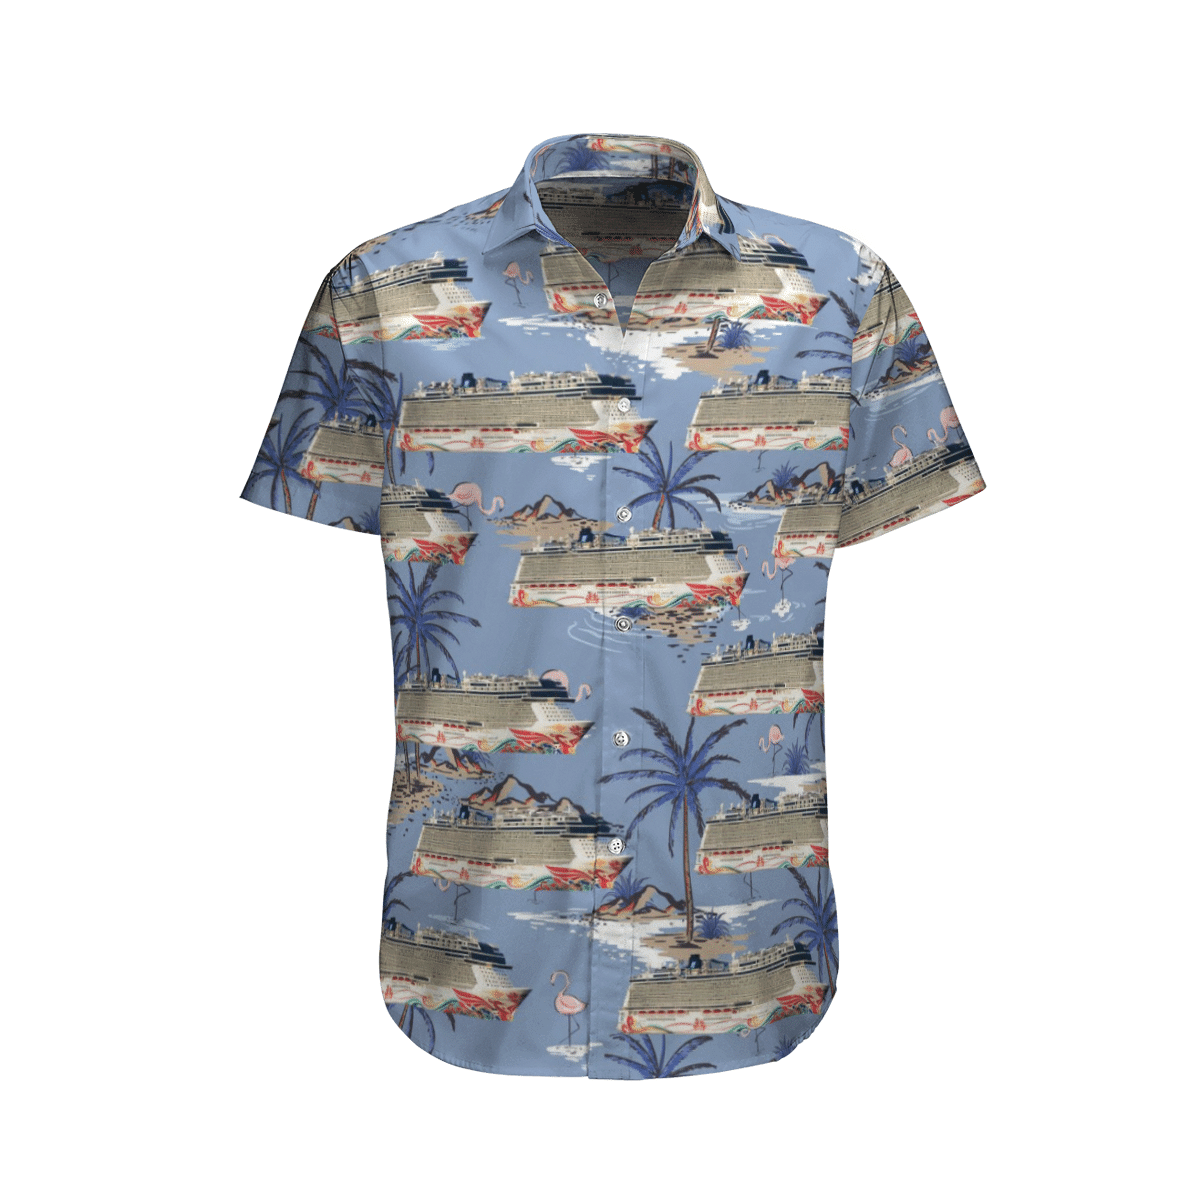 Get a new Hawaiian shirt to enjoy summer vacation 182